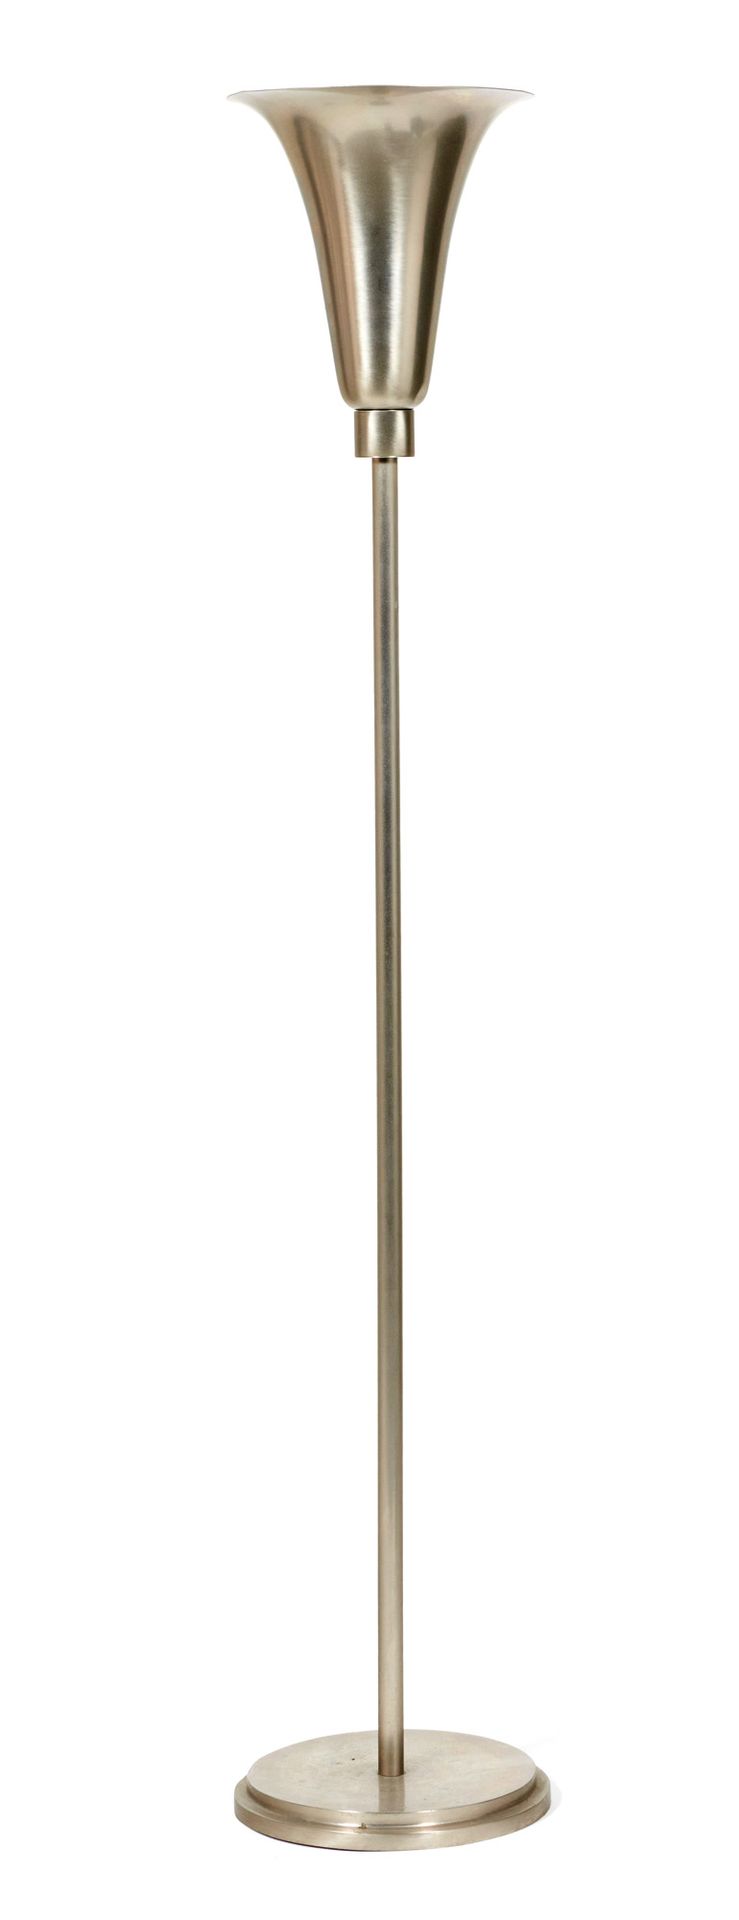 TRAVAIL MODERNE DE STYLE MODERNISTE 现代主义风格的作品

金属落地灯，圆形底座，圆柱形灯杆和喇叭形反射器。

身高170厘米&hellip;